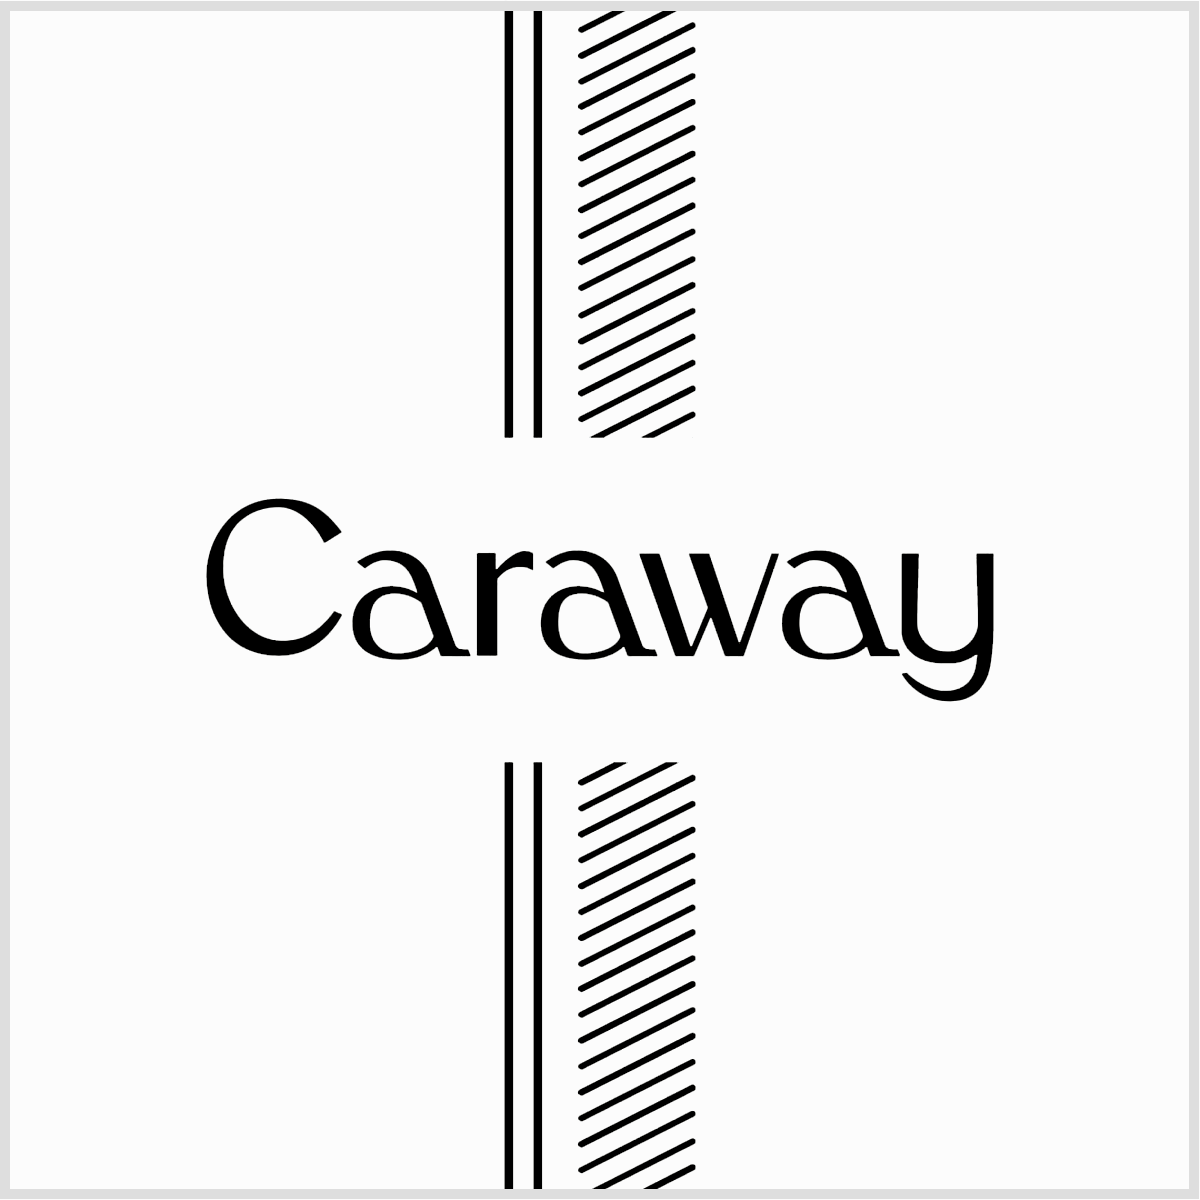 caraway2.png